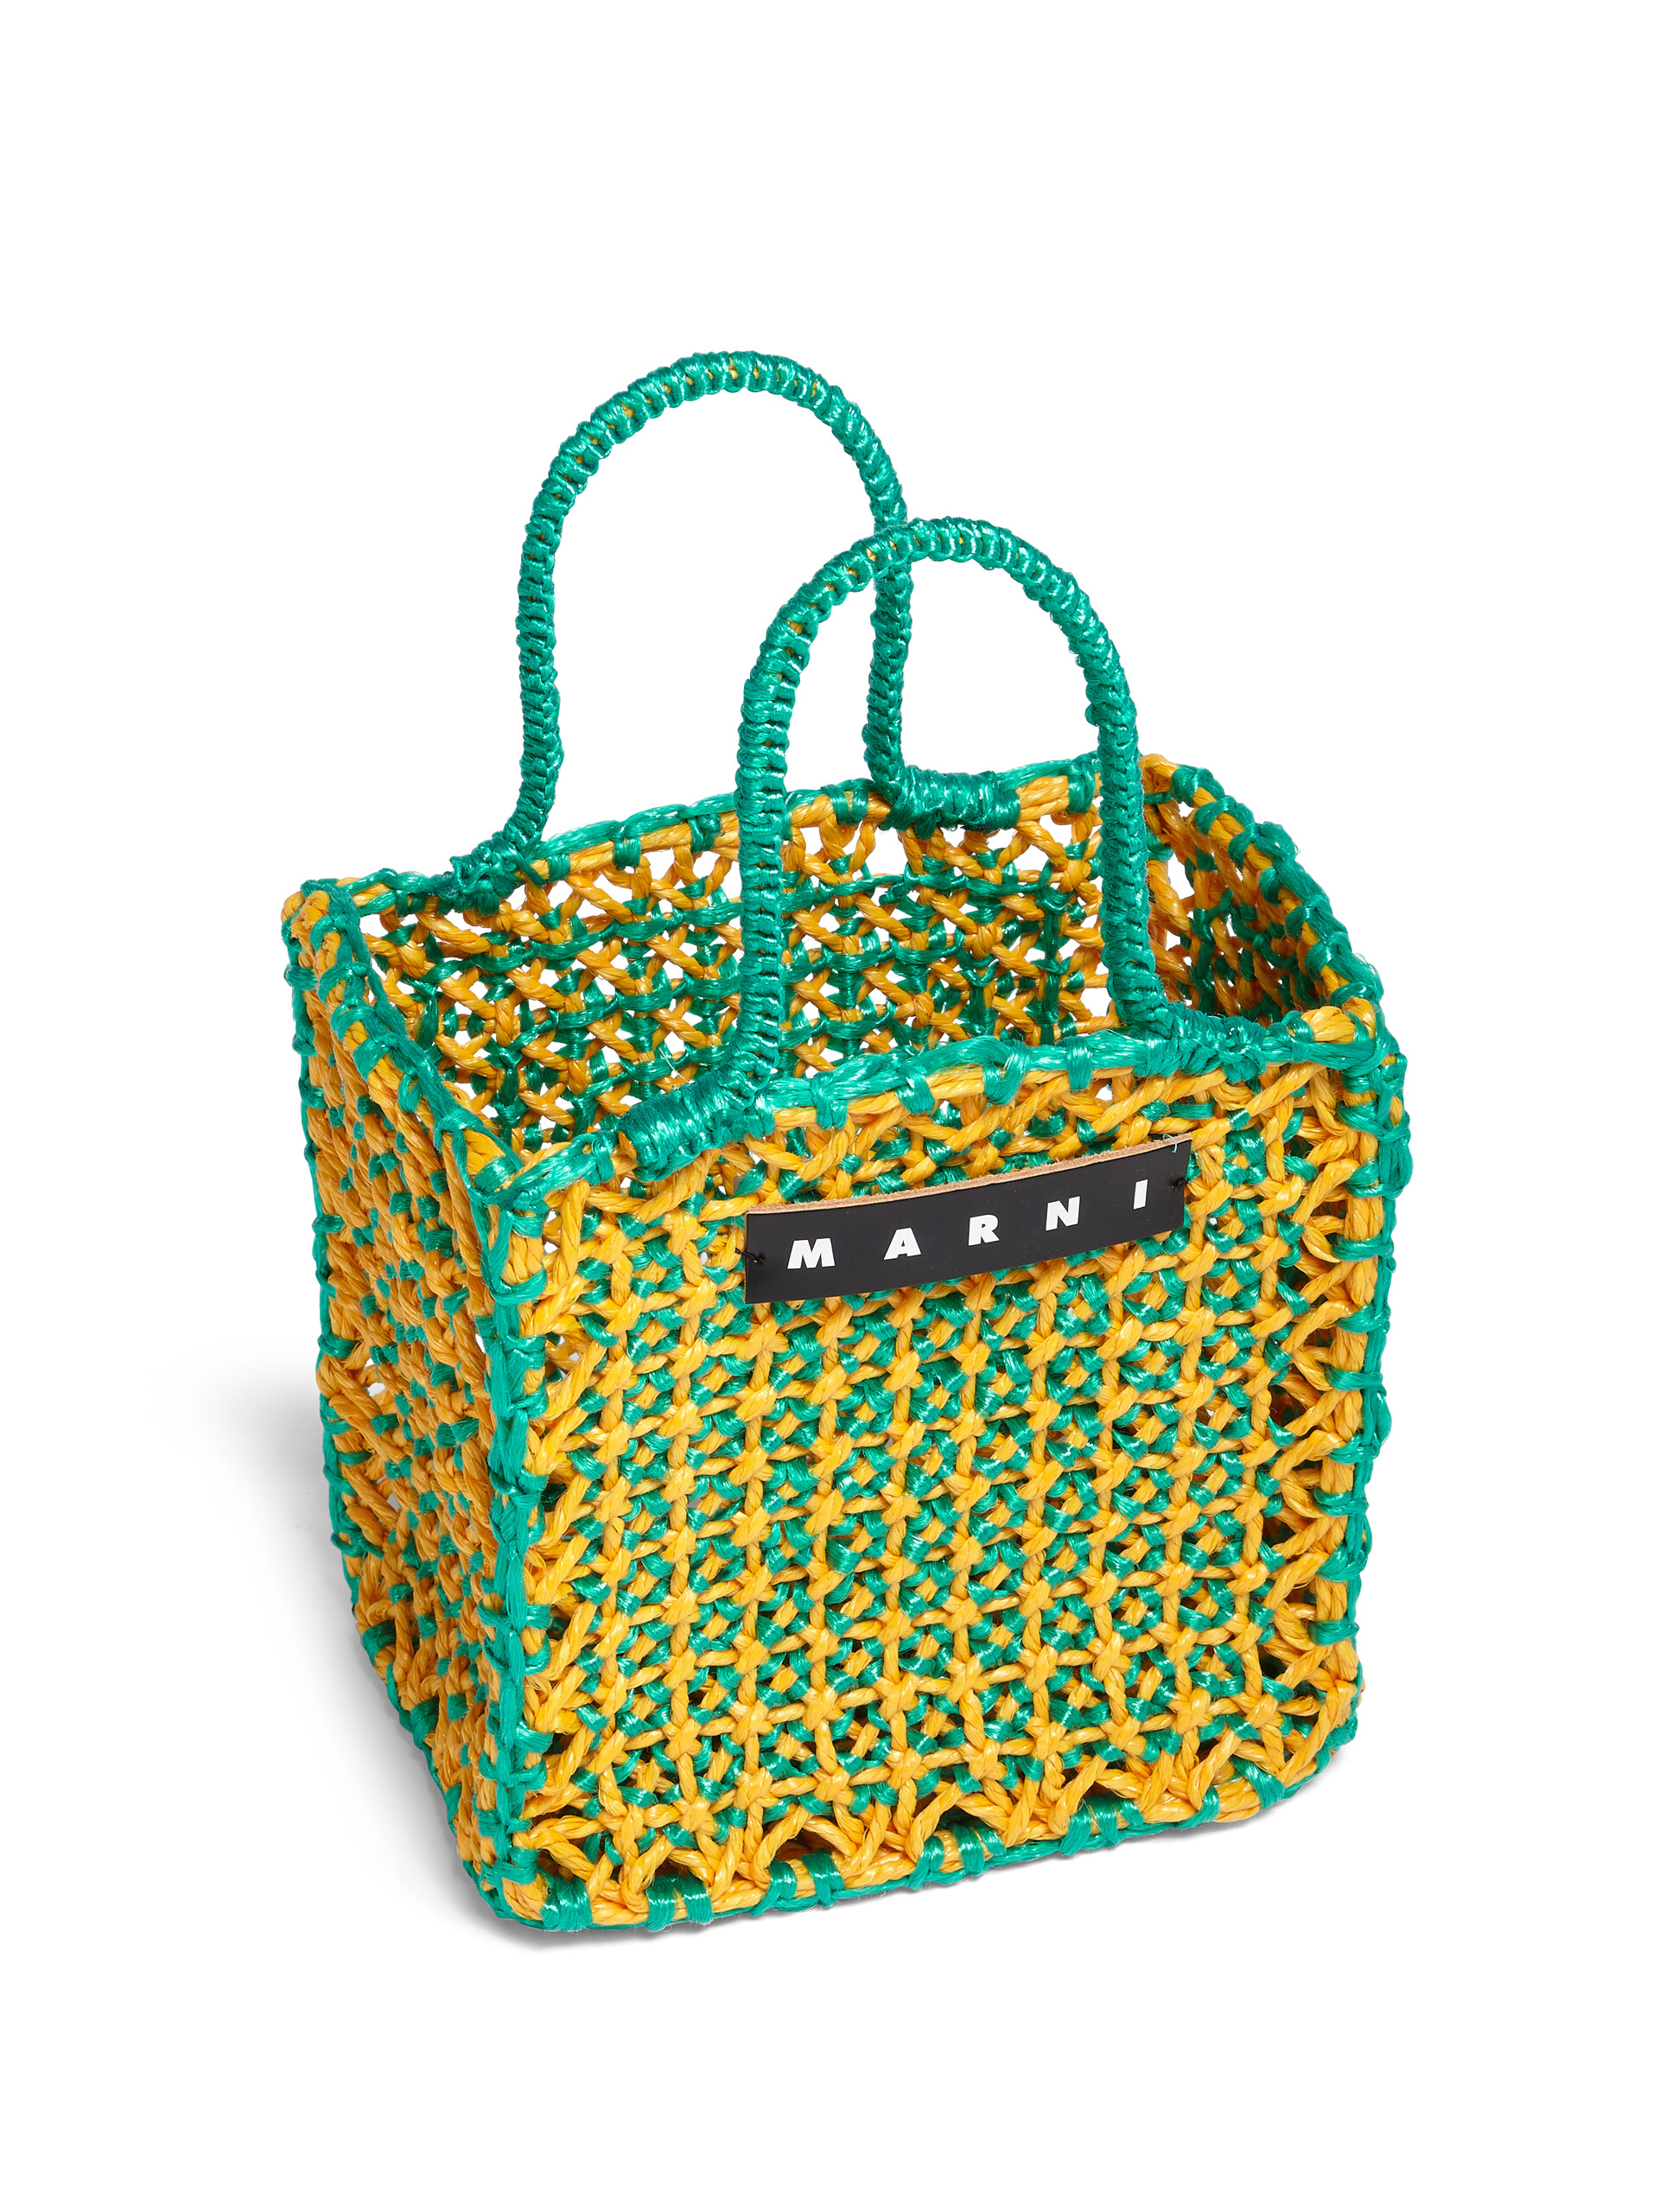 MARNI MARKET JURTA small bag in green and yellow crochet - Bags - Image 4